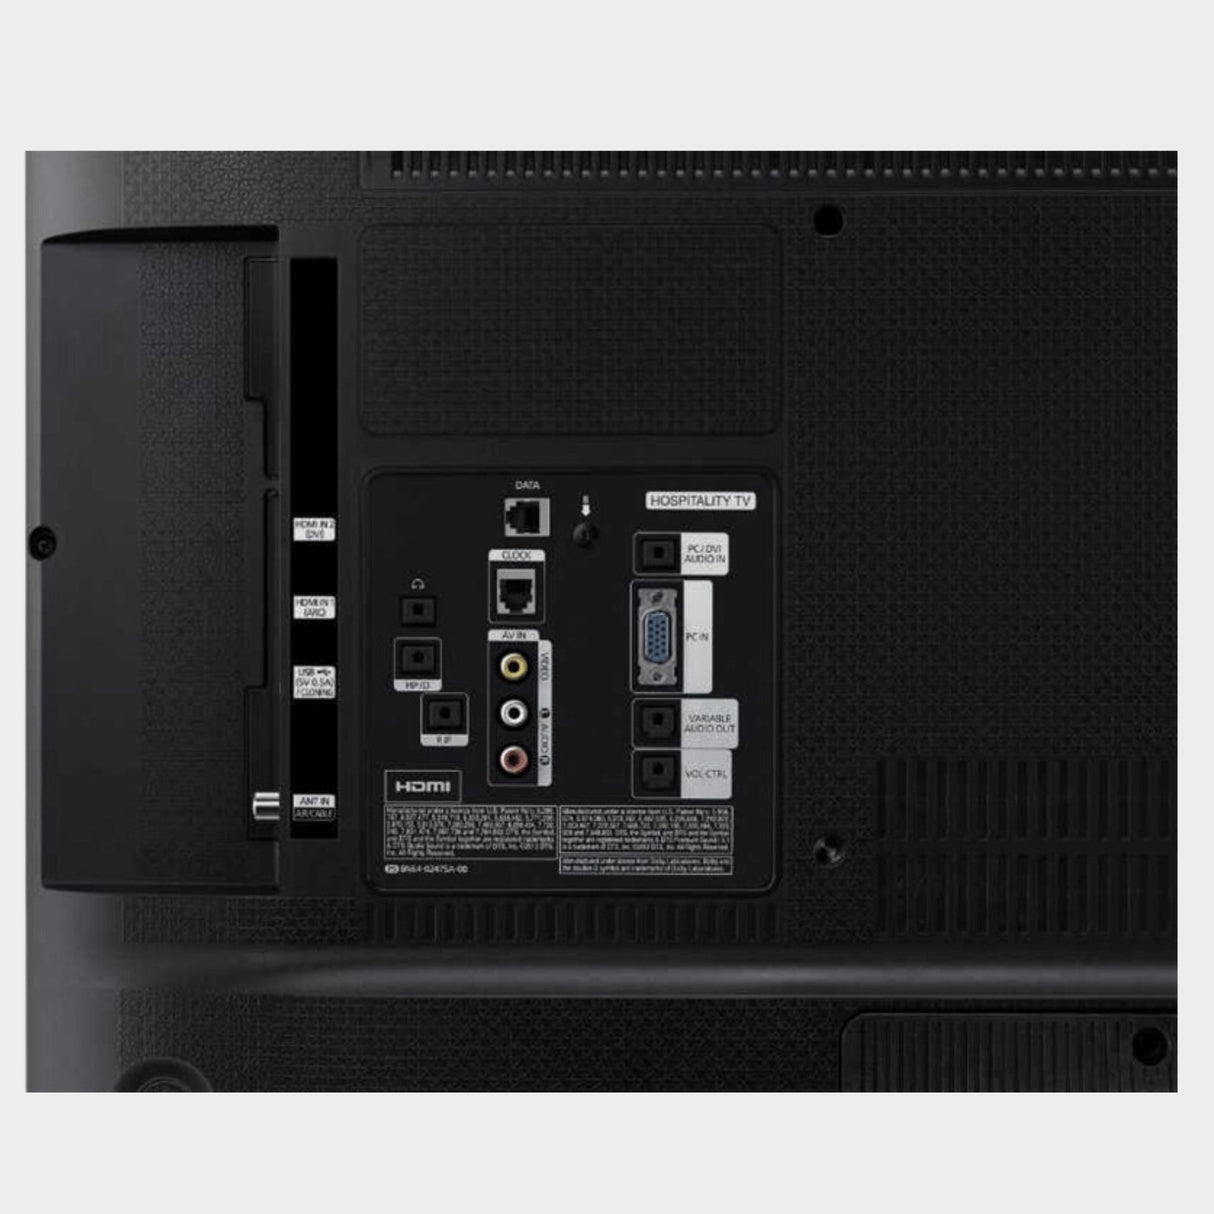 Samsung 32 – Inch IP TV, Hotel Display TV, HG32AD670 – Black - KWT Tech Mart